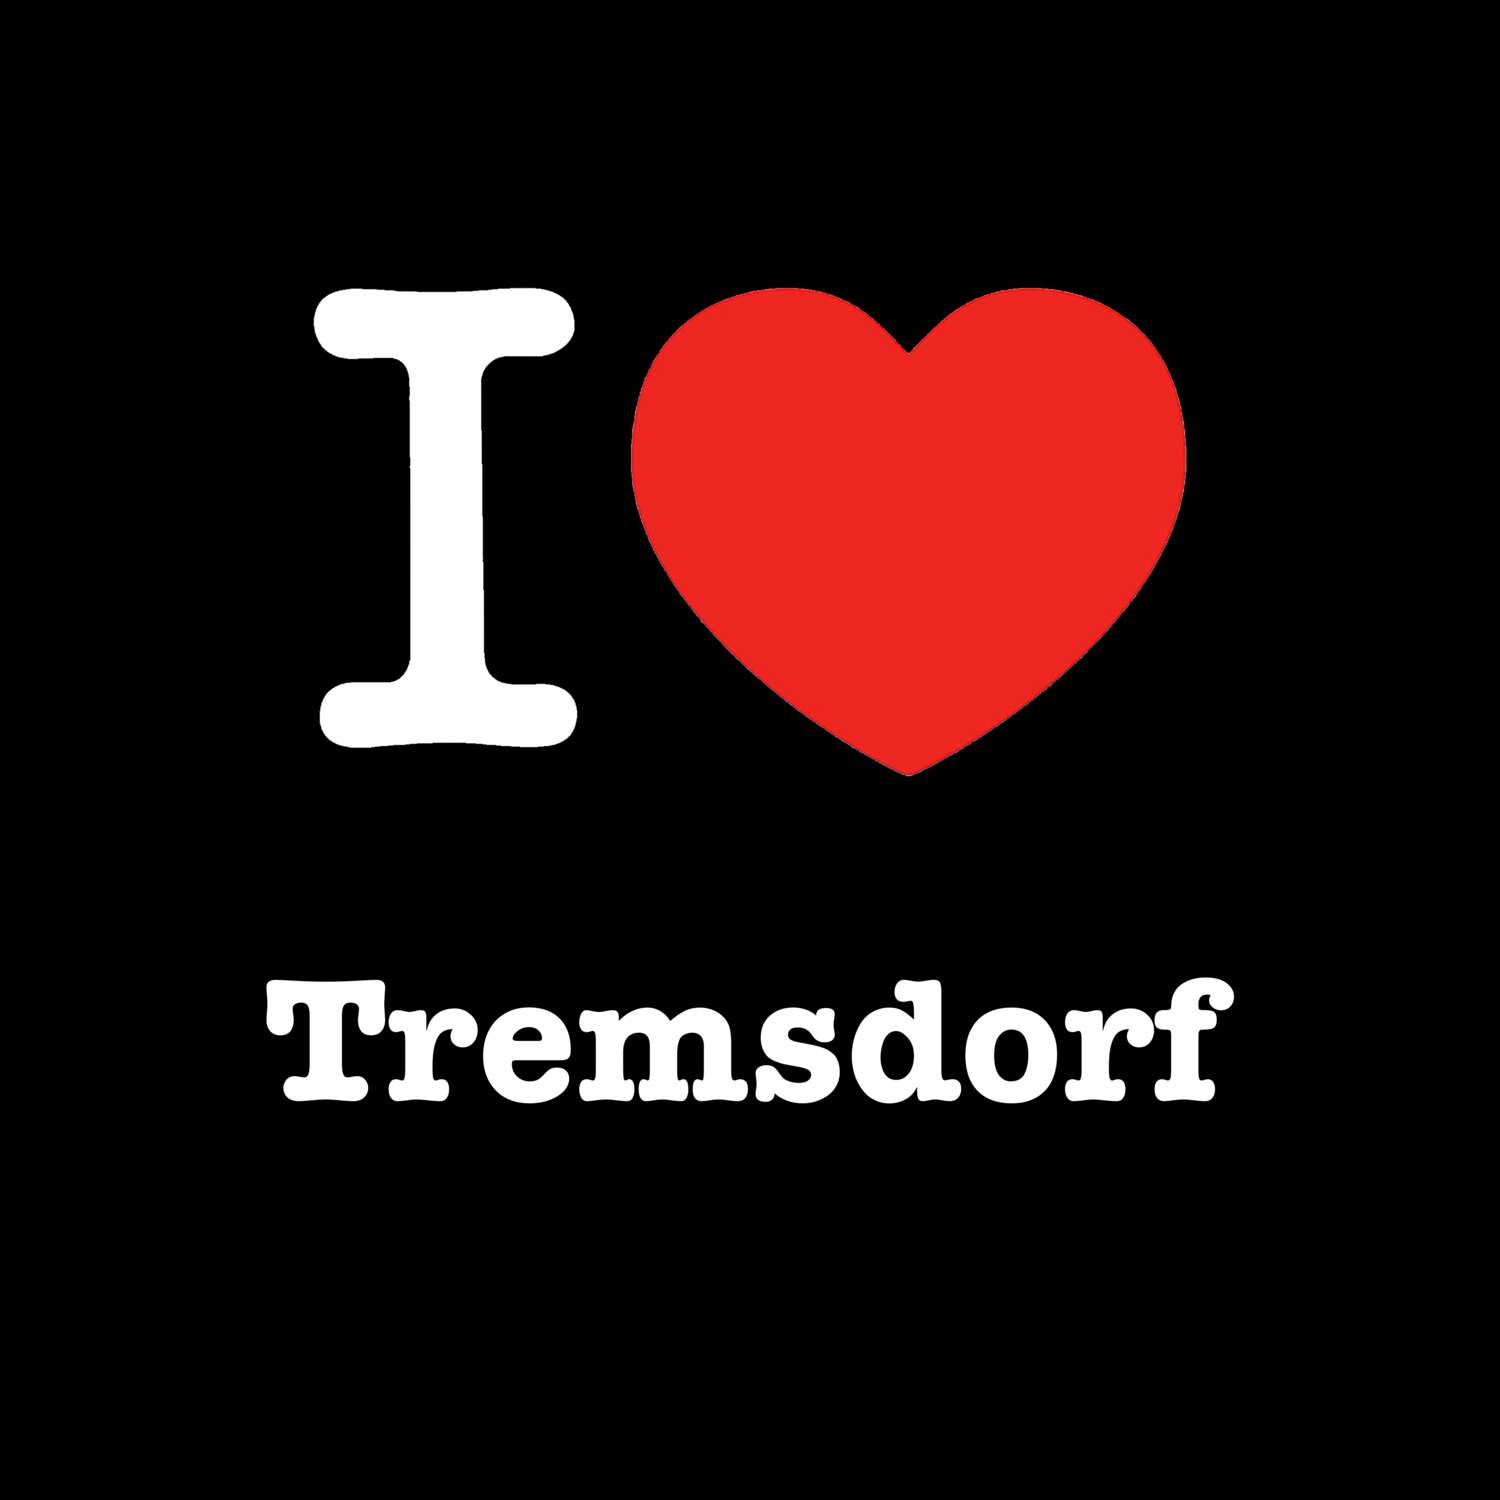 Tremsdorf T-Shirt »I love«